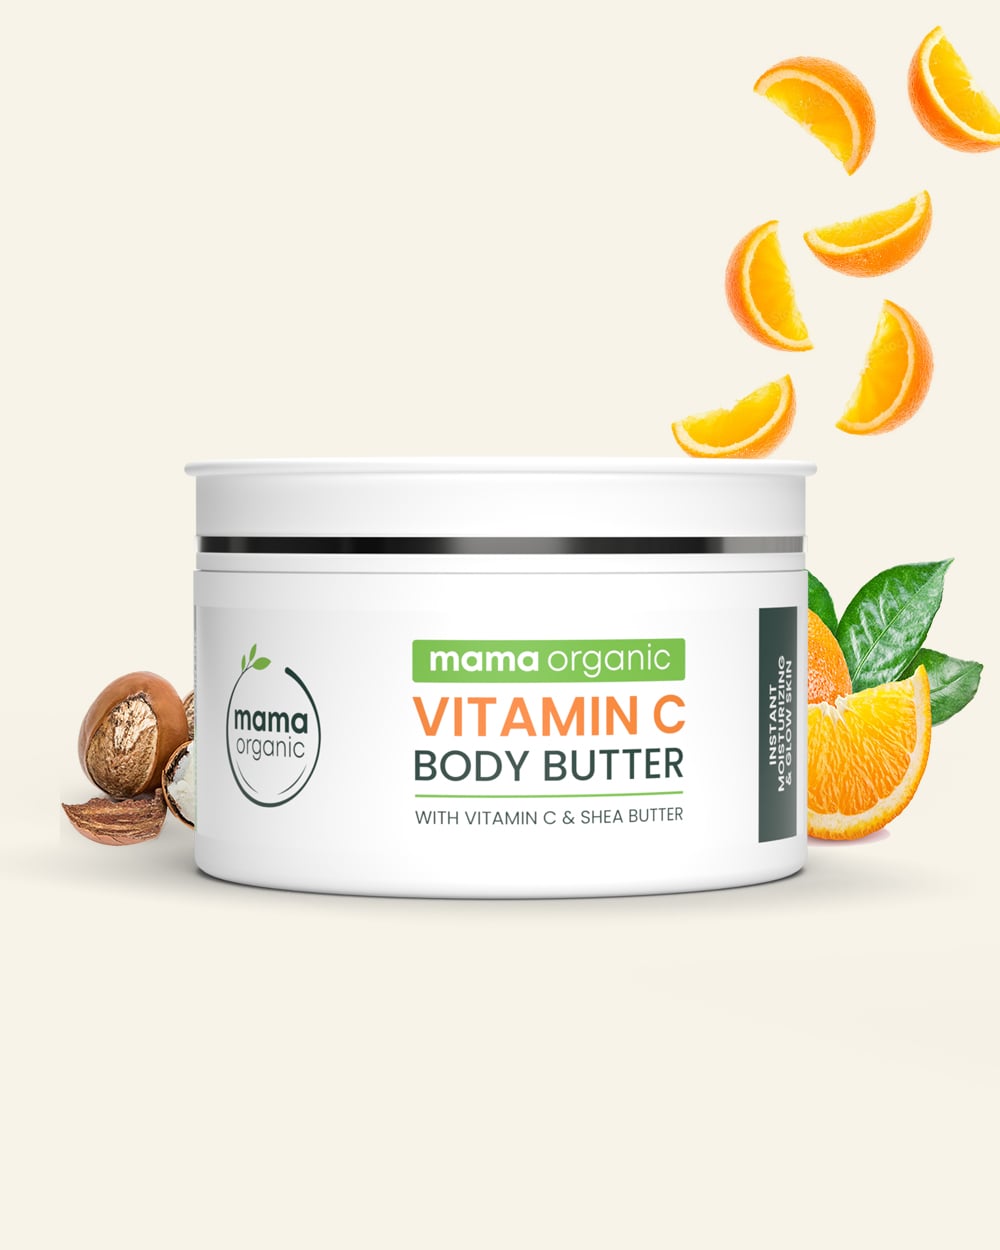 Vitamin C Body Butter Instant moisturizing & Glow Skin With Vitamin C  & Shea Butter - 100g - MamaOrganic 